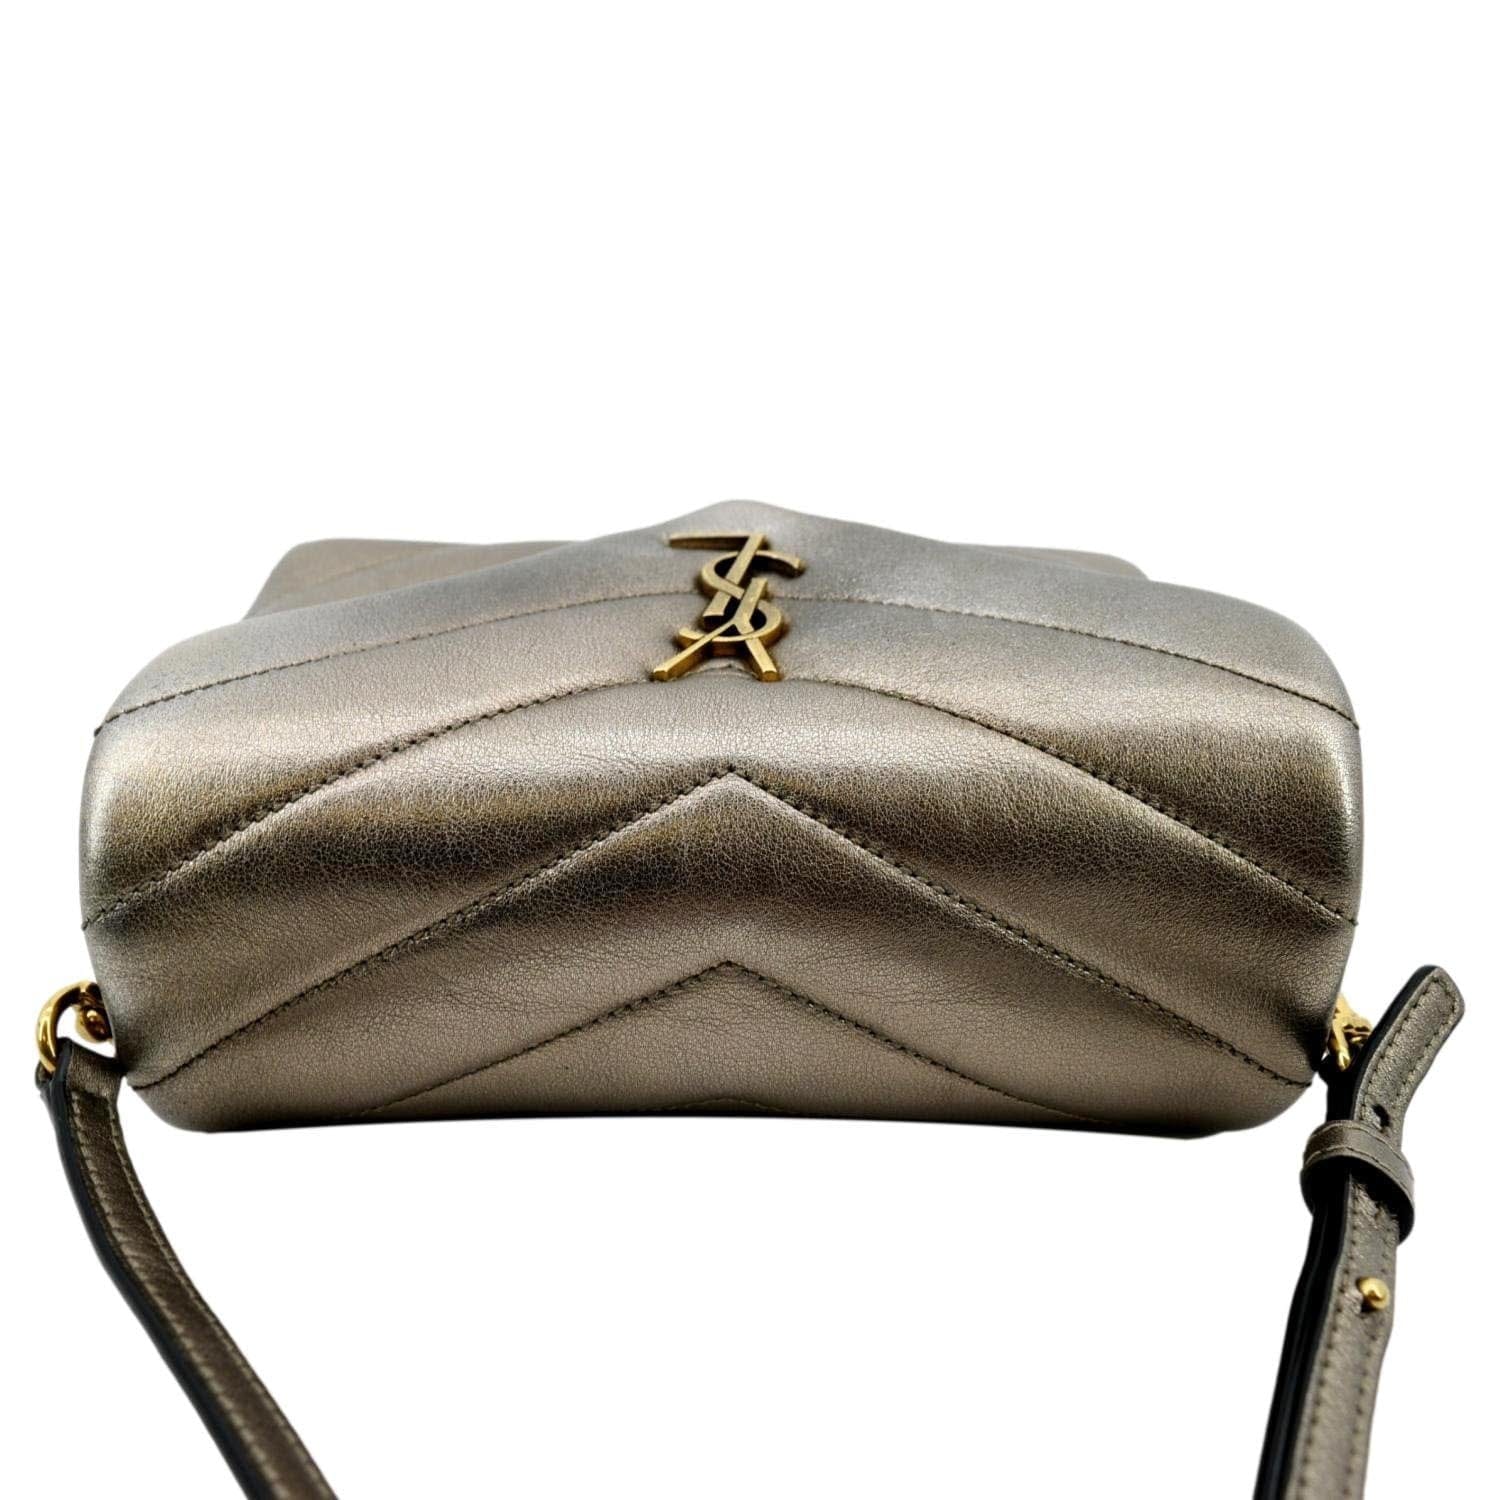 Yves Saint Laurent Loulou Toy Matelasse Leather Bag